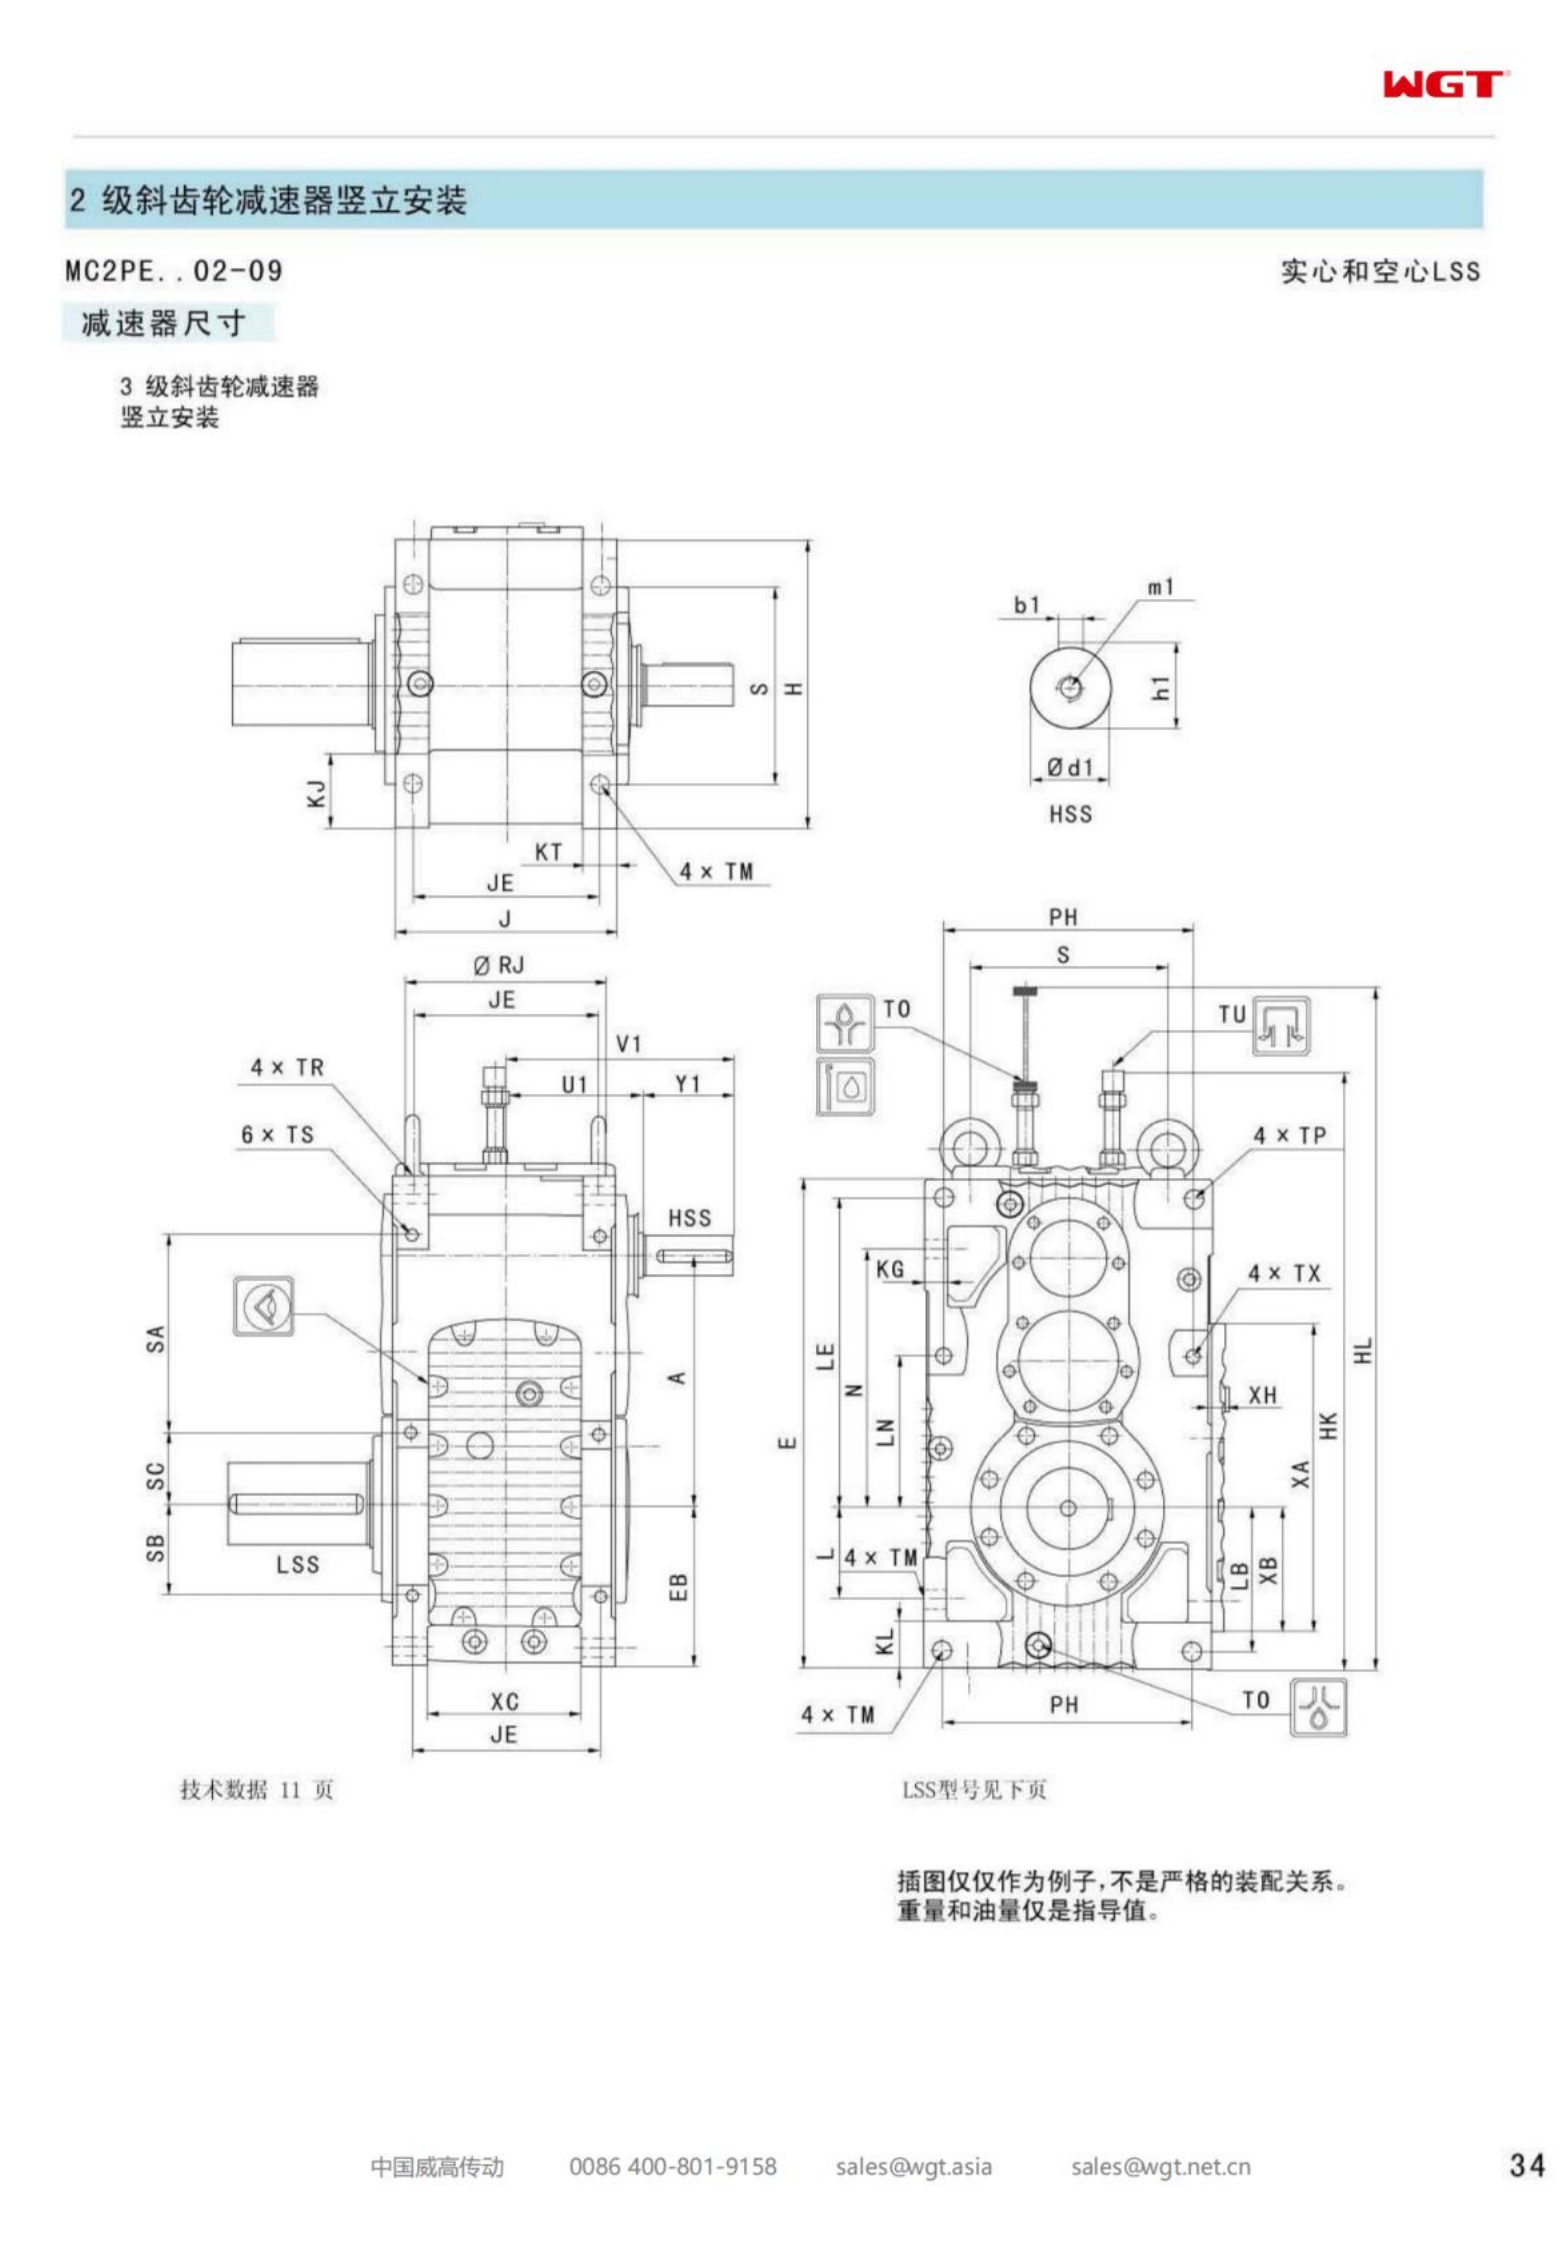 MC2PEHF06 replaces _SEW_MC_Series gearbox (patent)